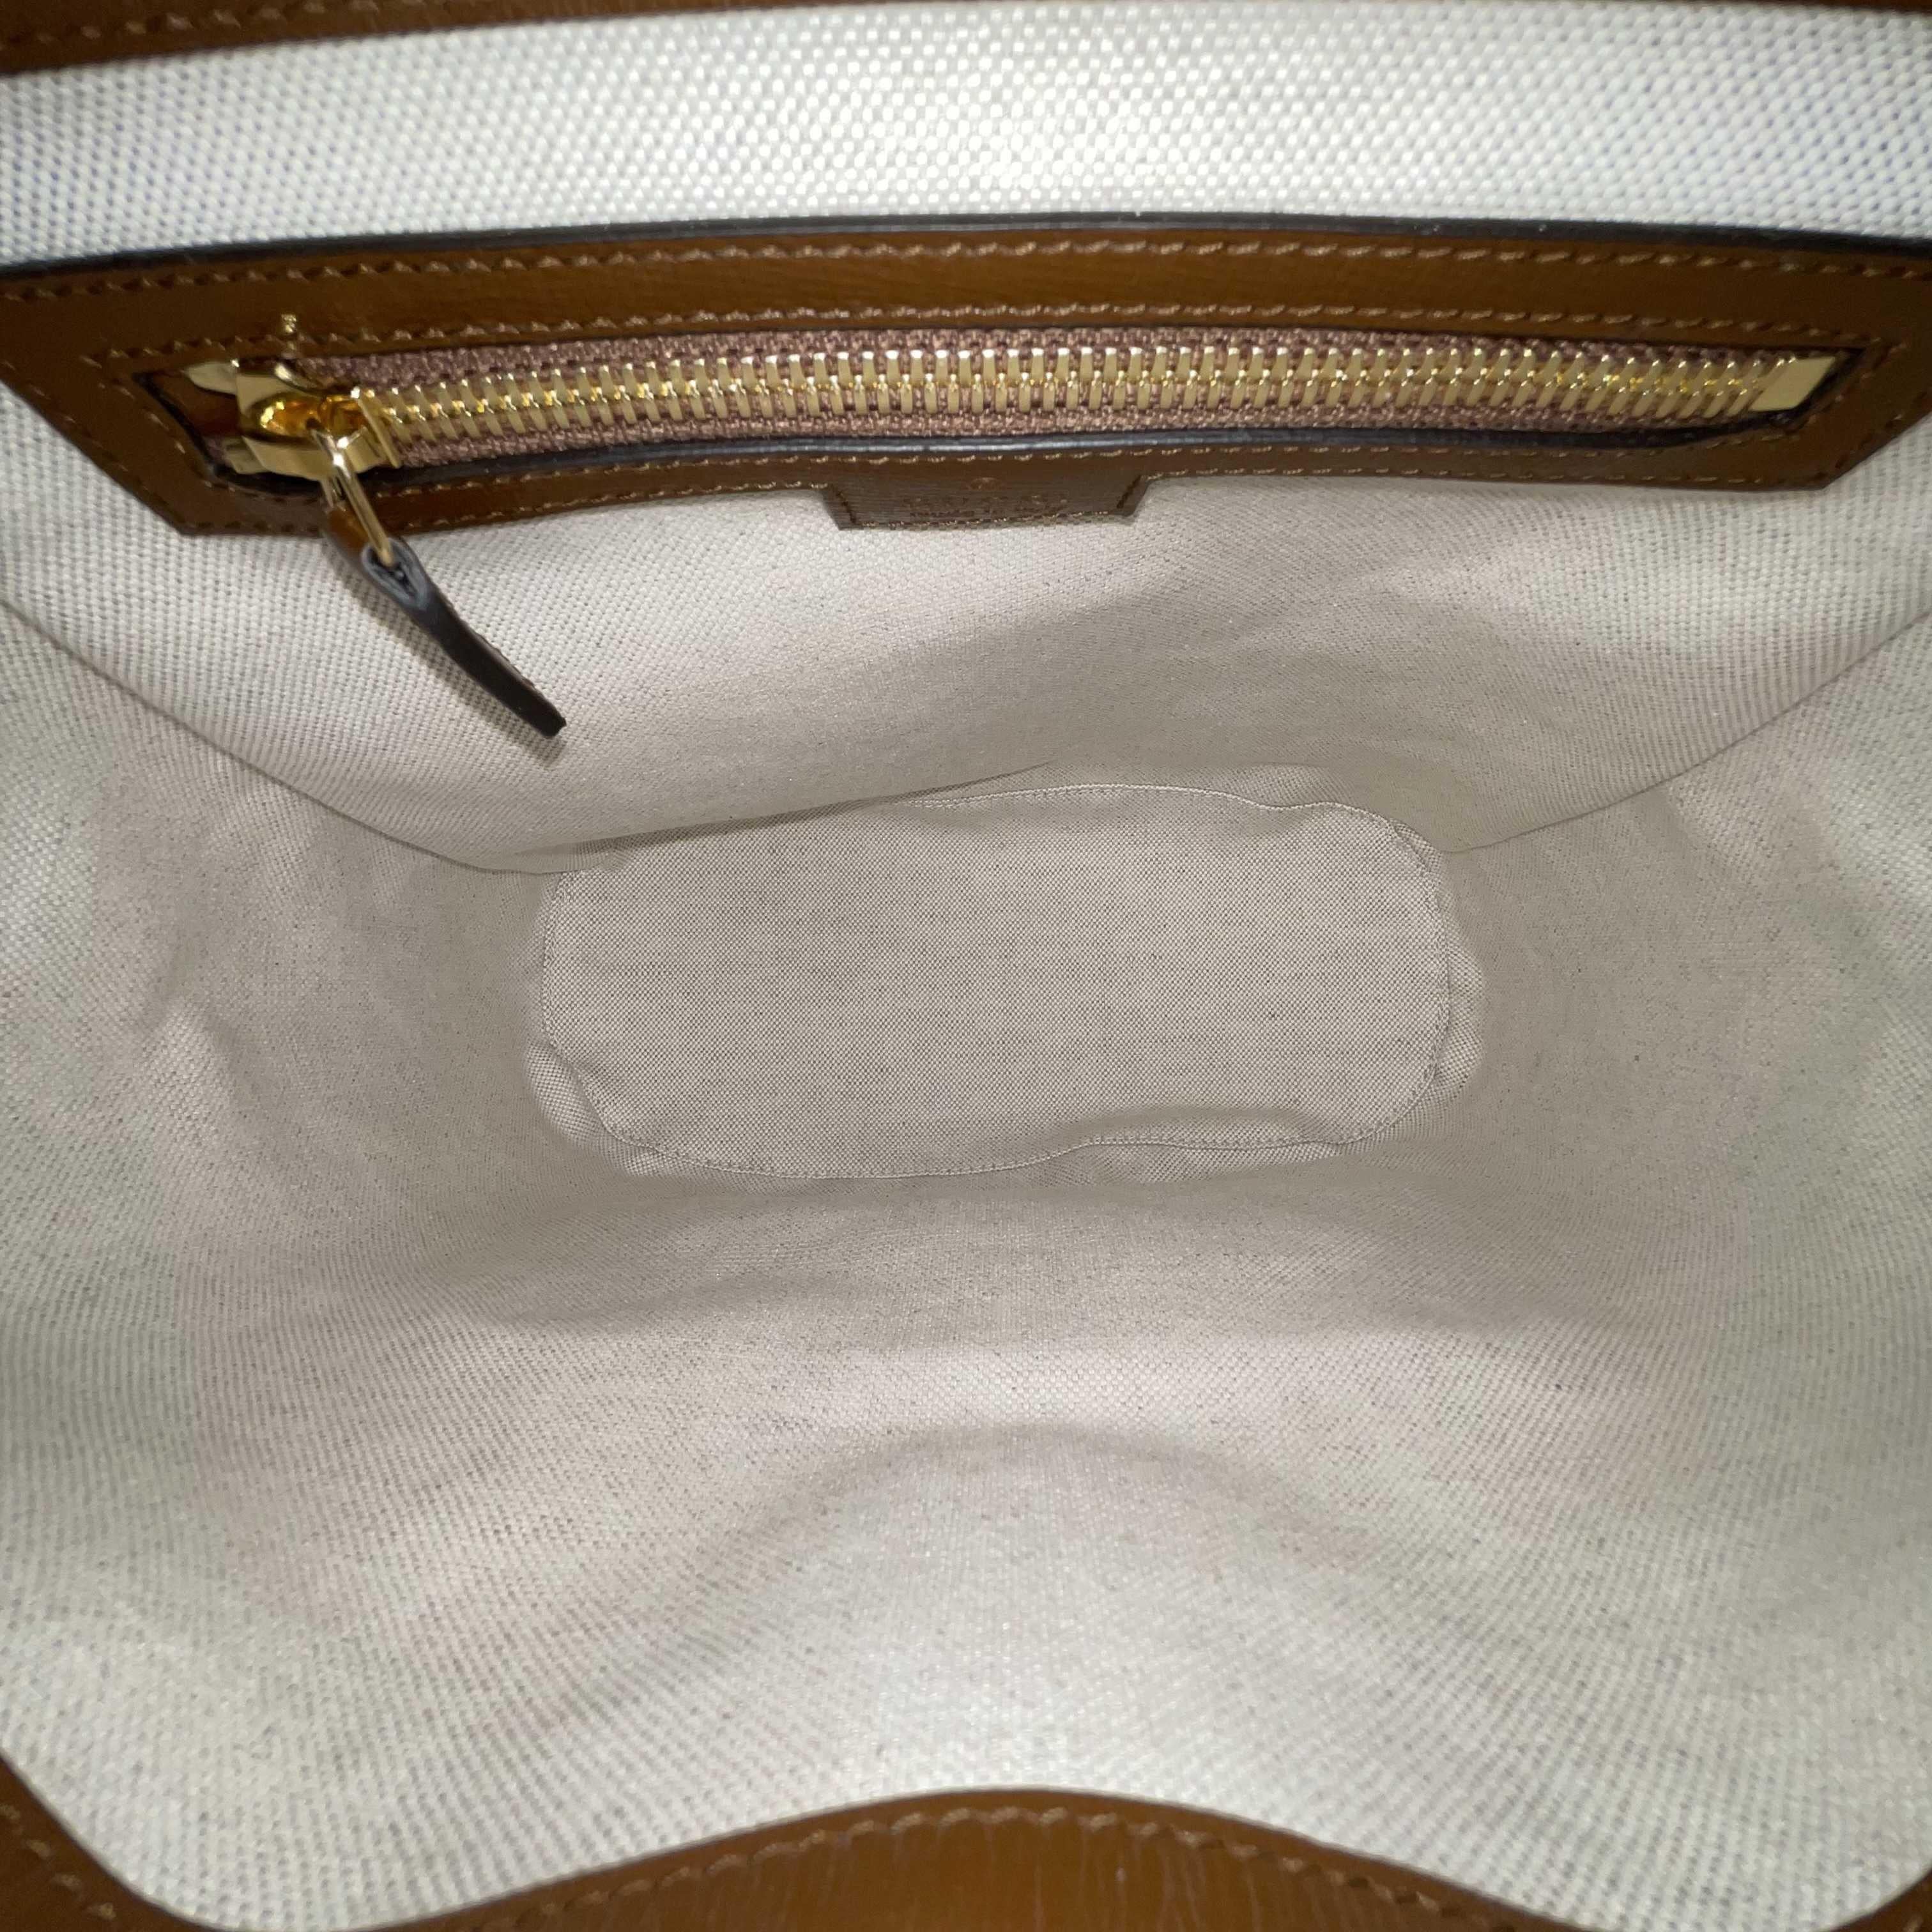 Gucci - NEW Backpack With Interlocking G - Beige / Brown Monogram Backpack 5